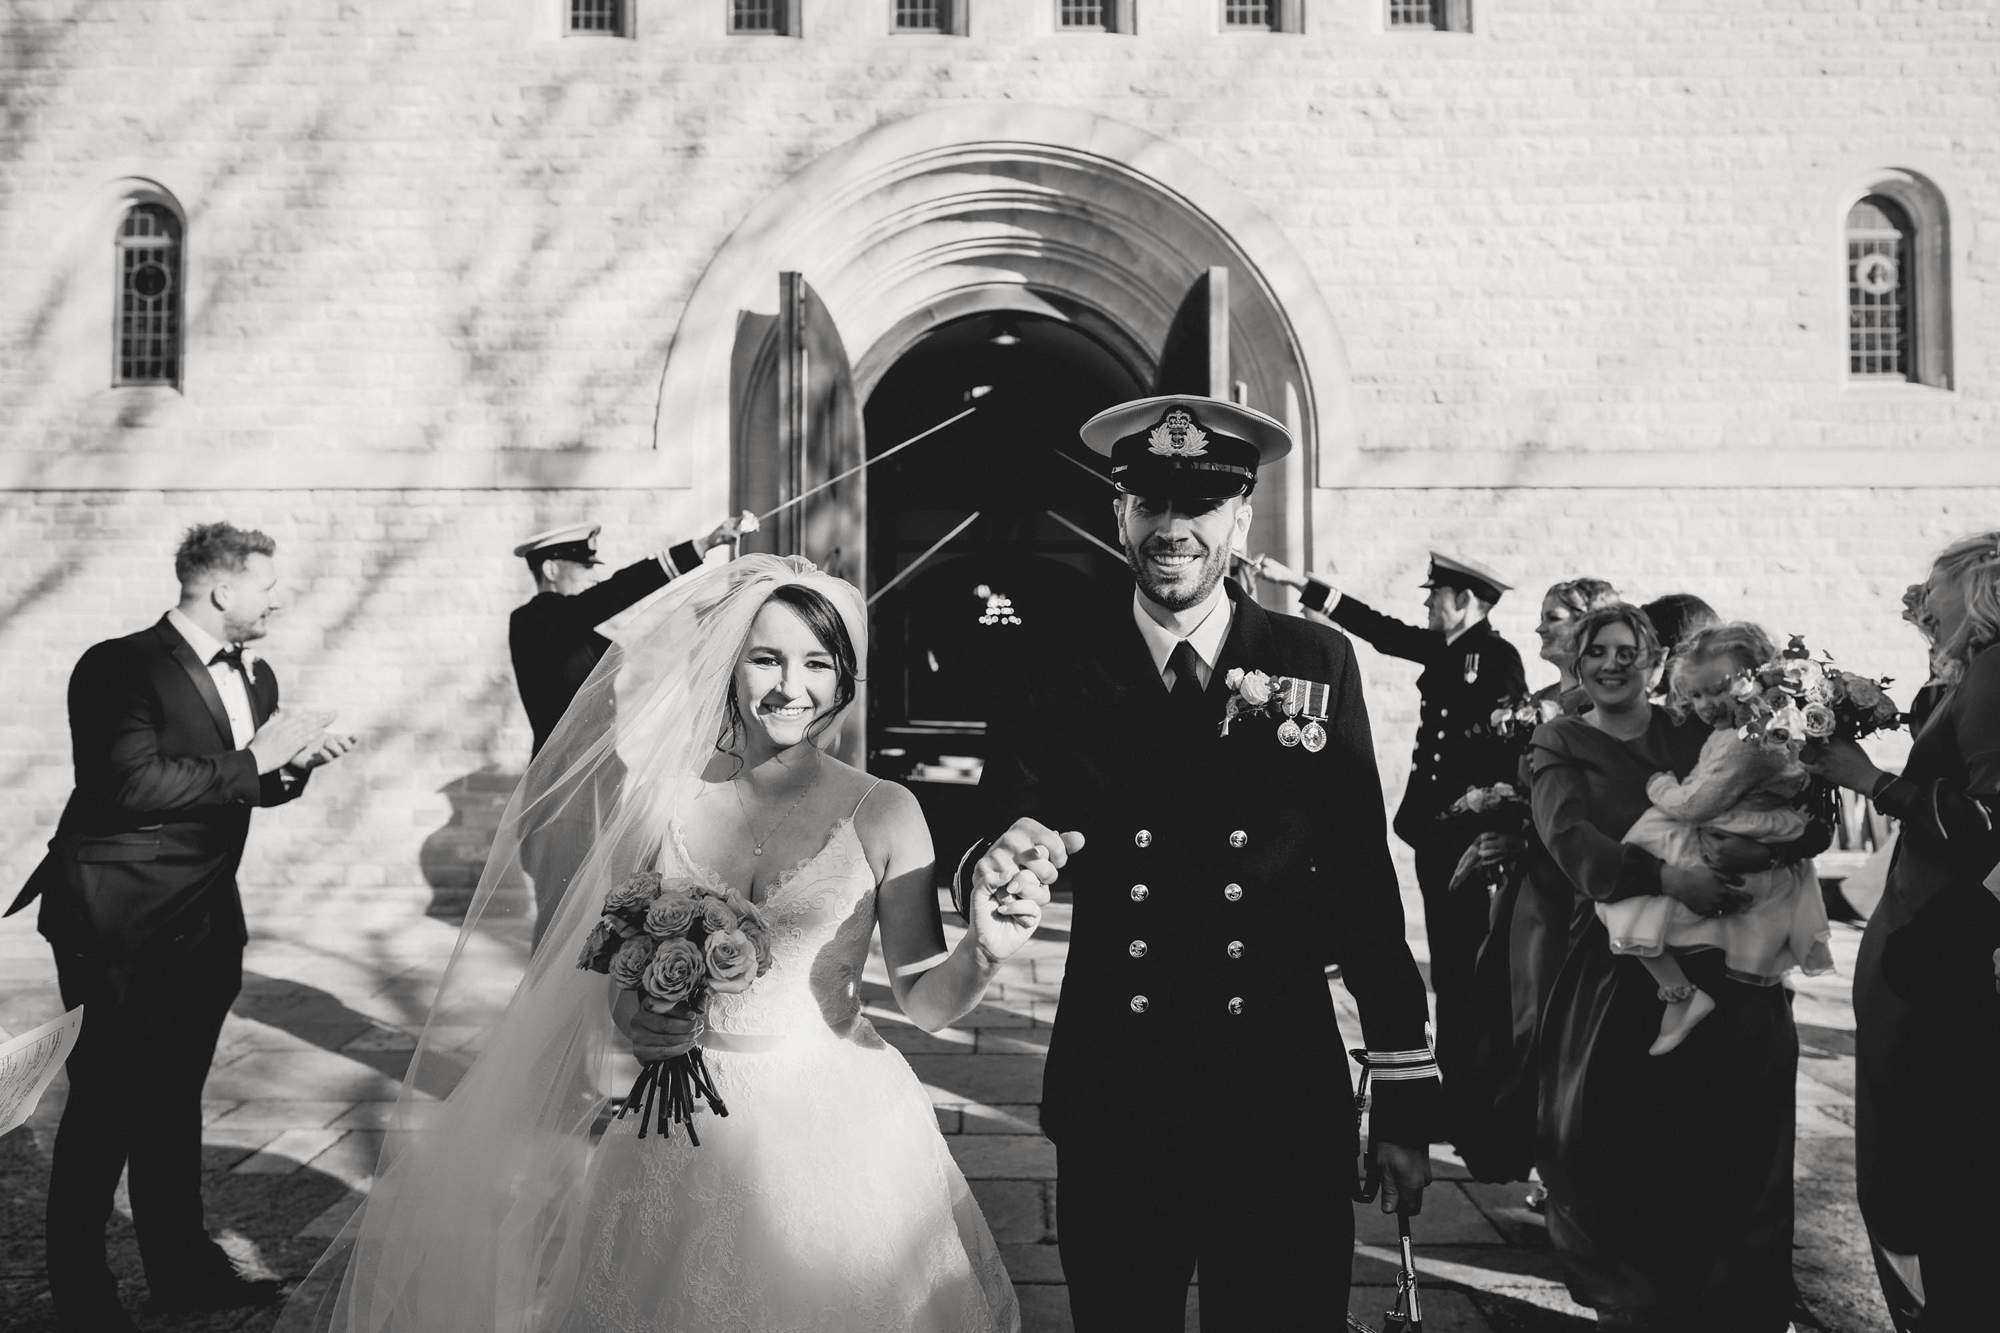 Naval wedding with bride and groom walking through swords.